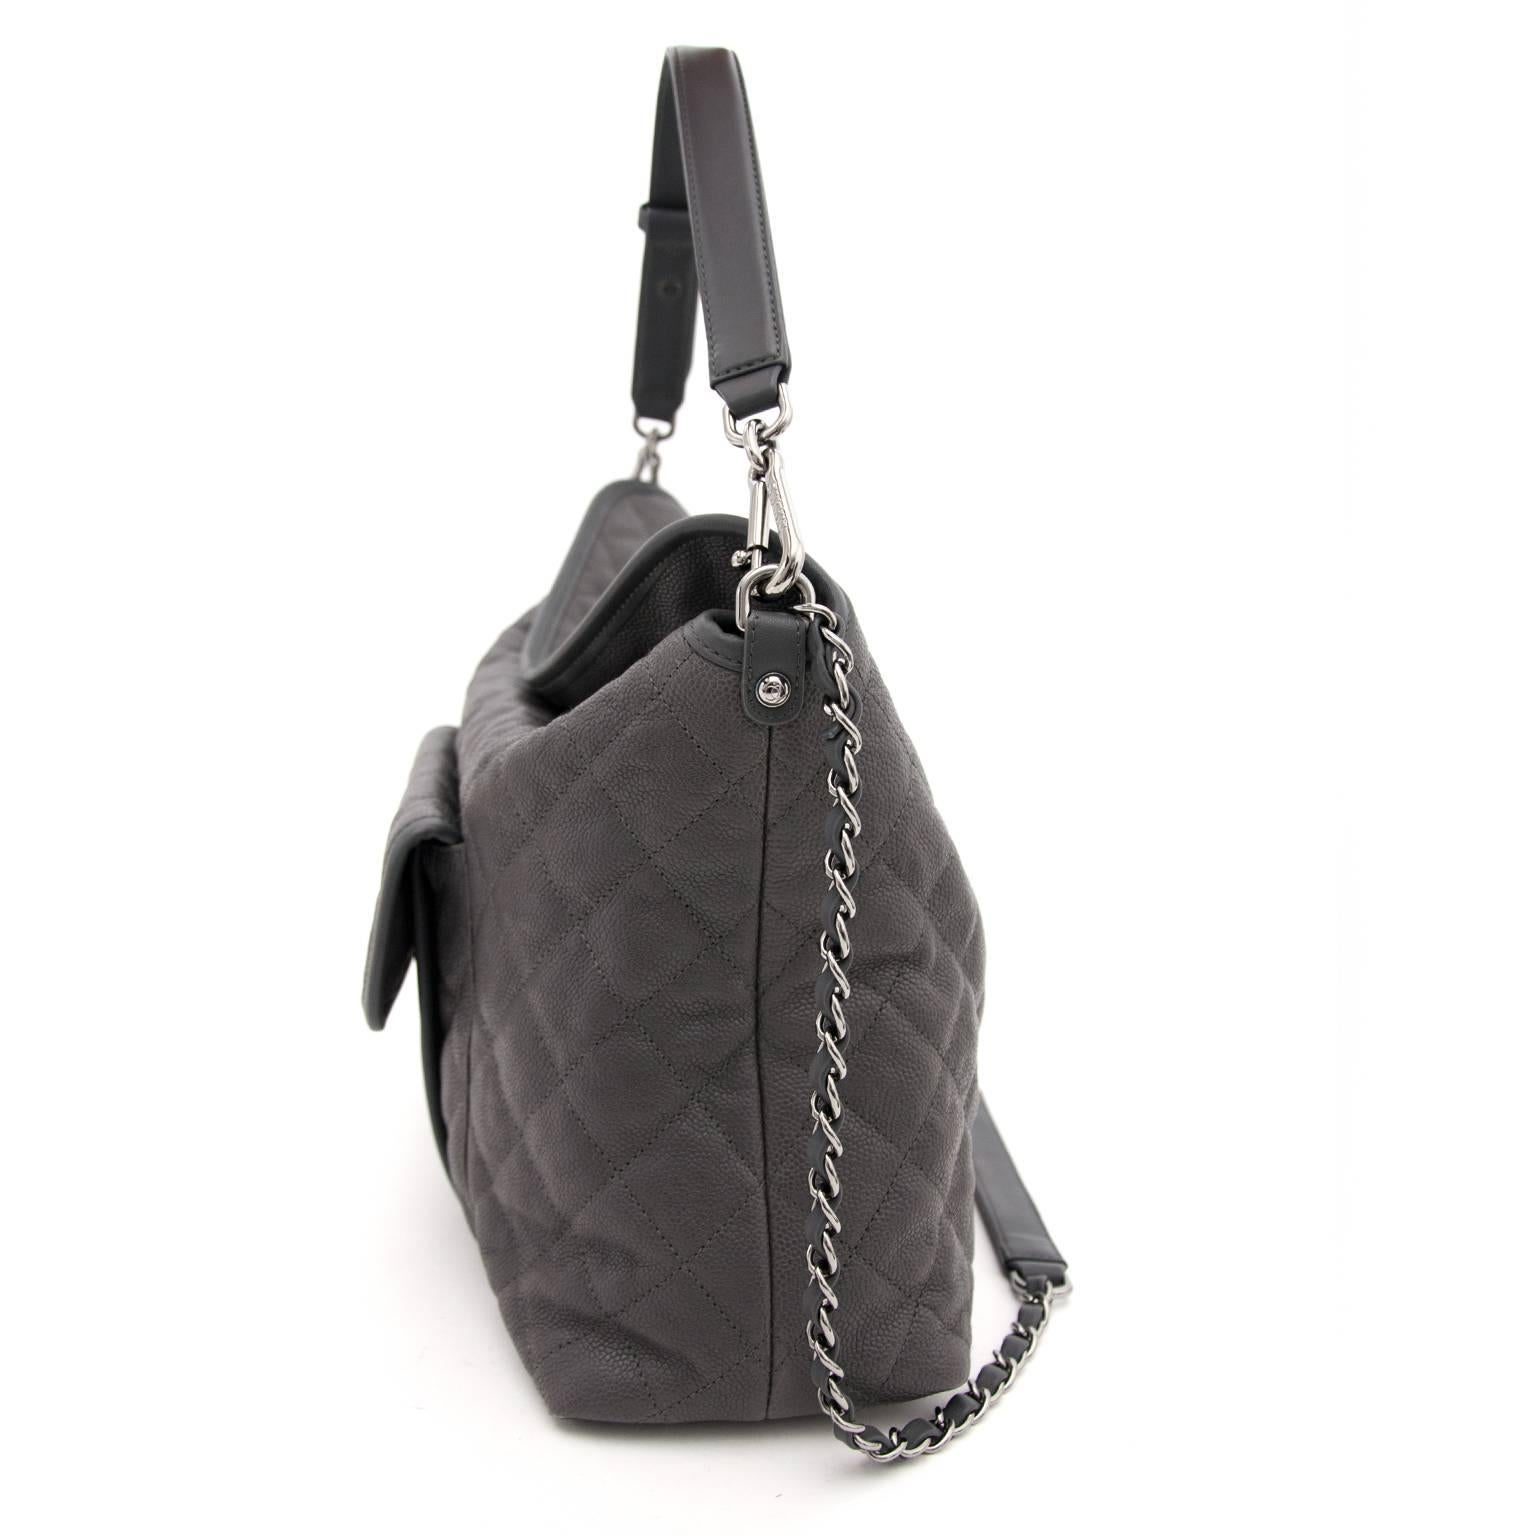 Women's or Men's Chanel Grey Leather Hobo Bag